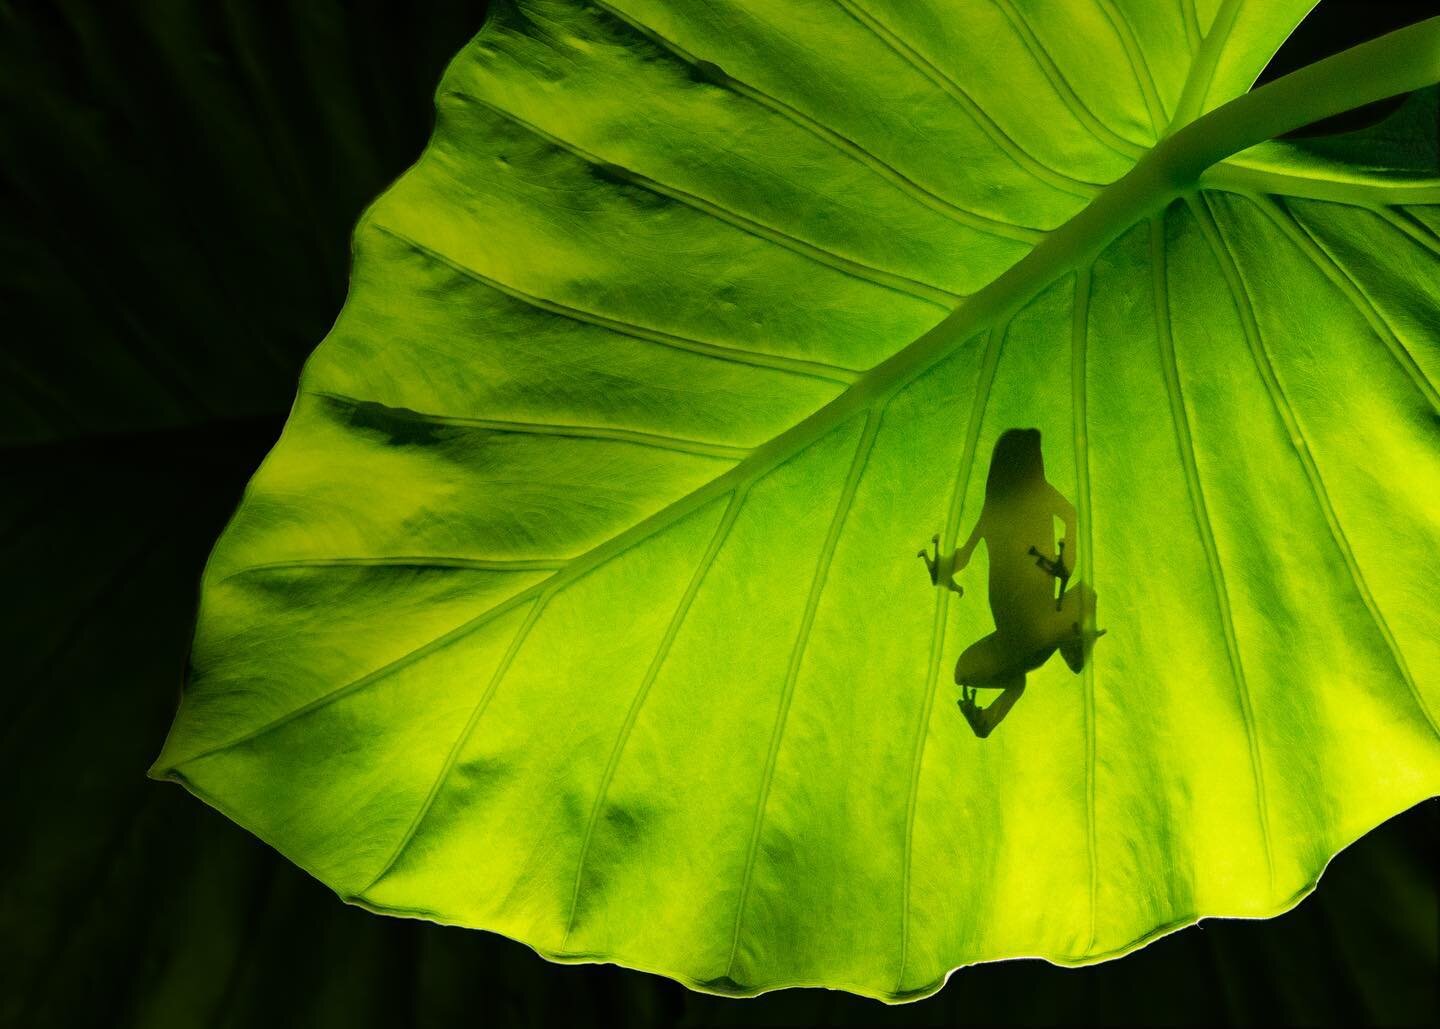 Poison Dart Frog on leaf

#nature #frogs #amphibians #amphiniansofinstgram #frogsofinstagram #dendrobates #environment #jungle #animal #naturephotography #ınstagood #beautiful #elephantear #plants